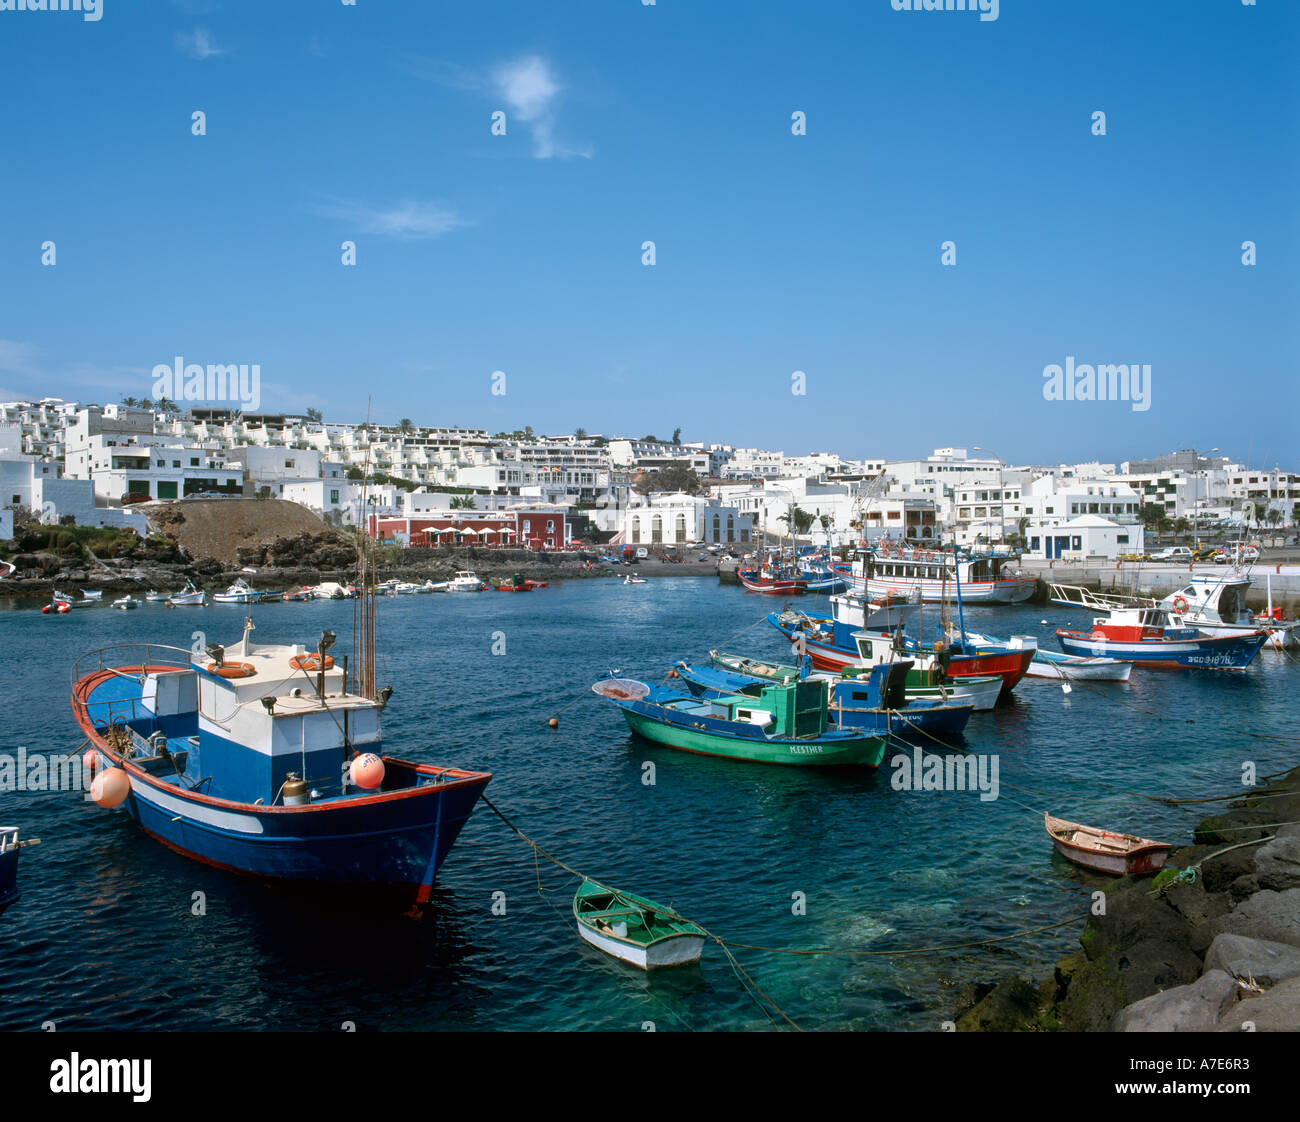 Port de pêche, Puerto del Carmen, Lanzarote, îles Canaries, Espagne Banque D'Images